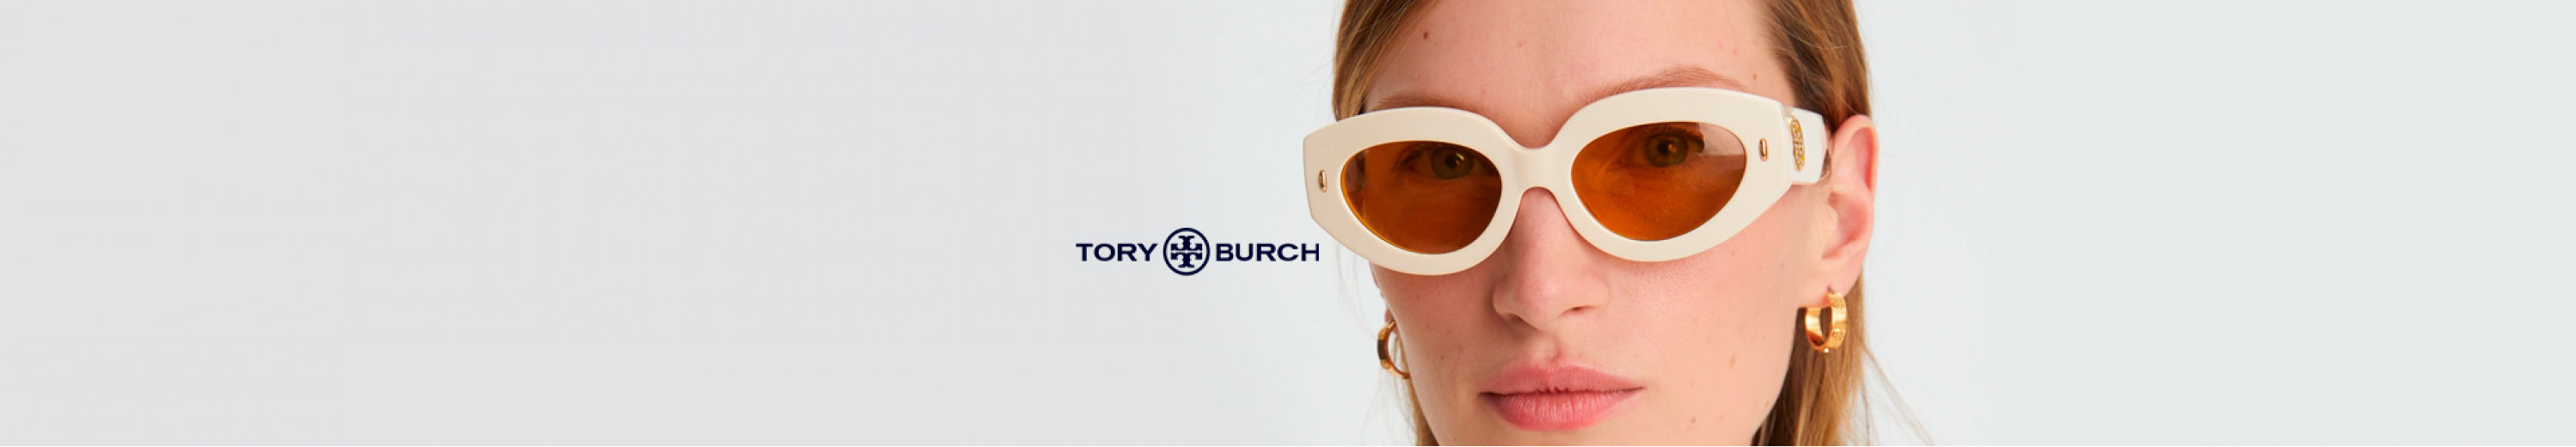 Tory Burch The Beach Edit Eyewear Collection